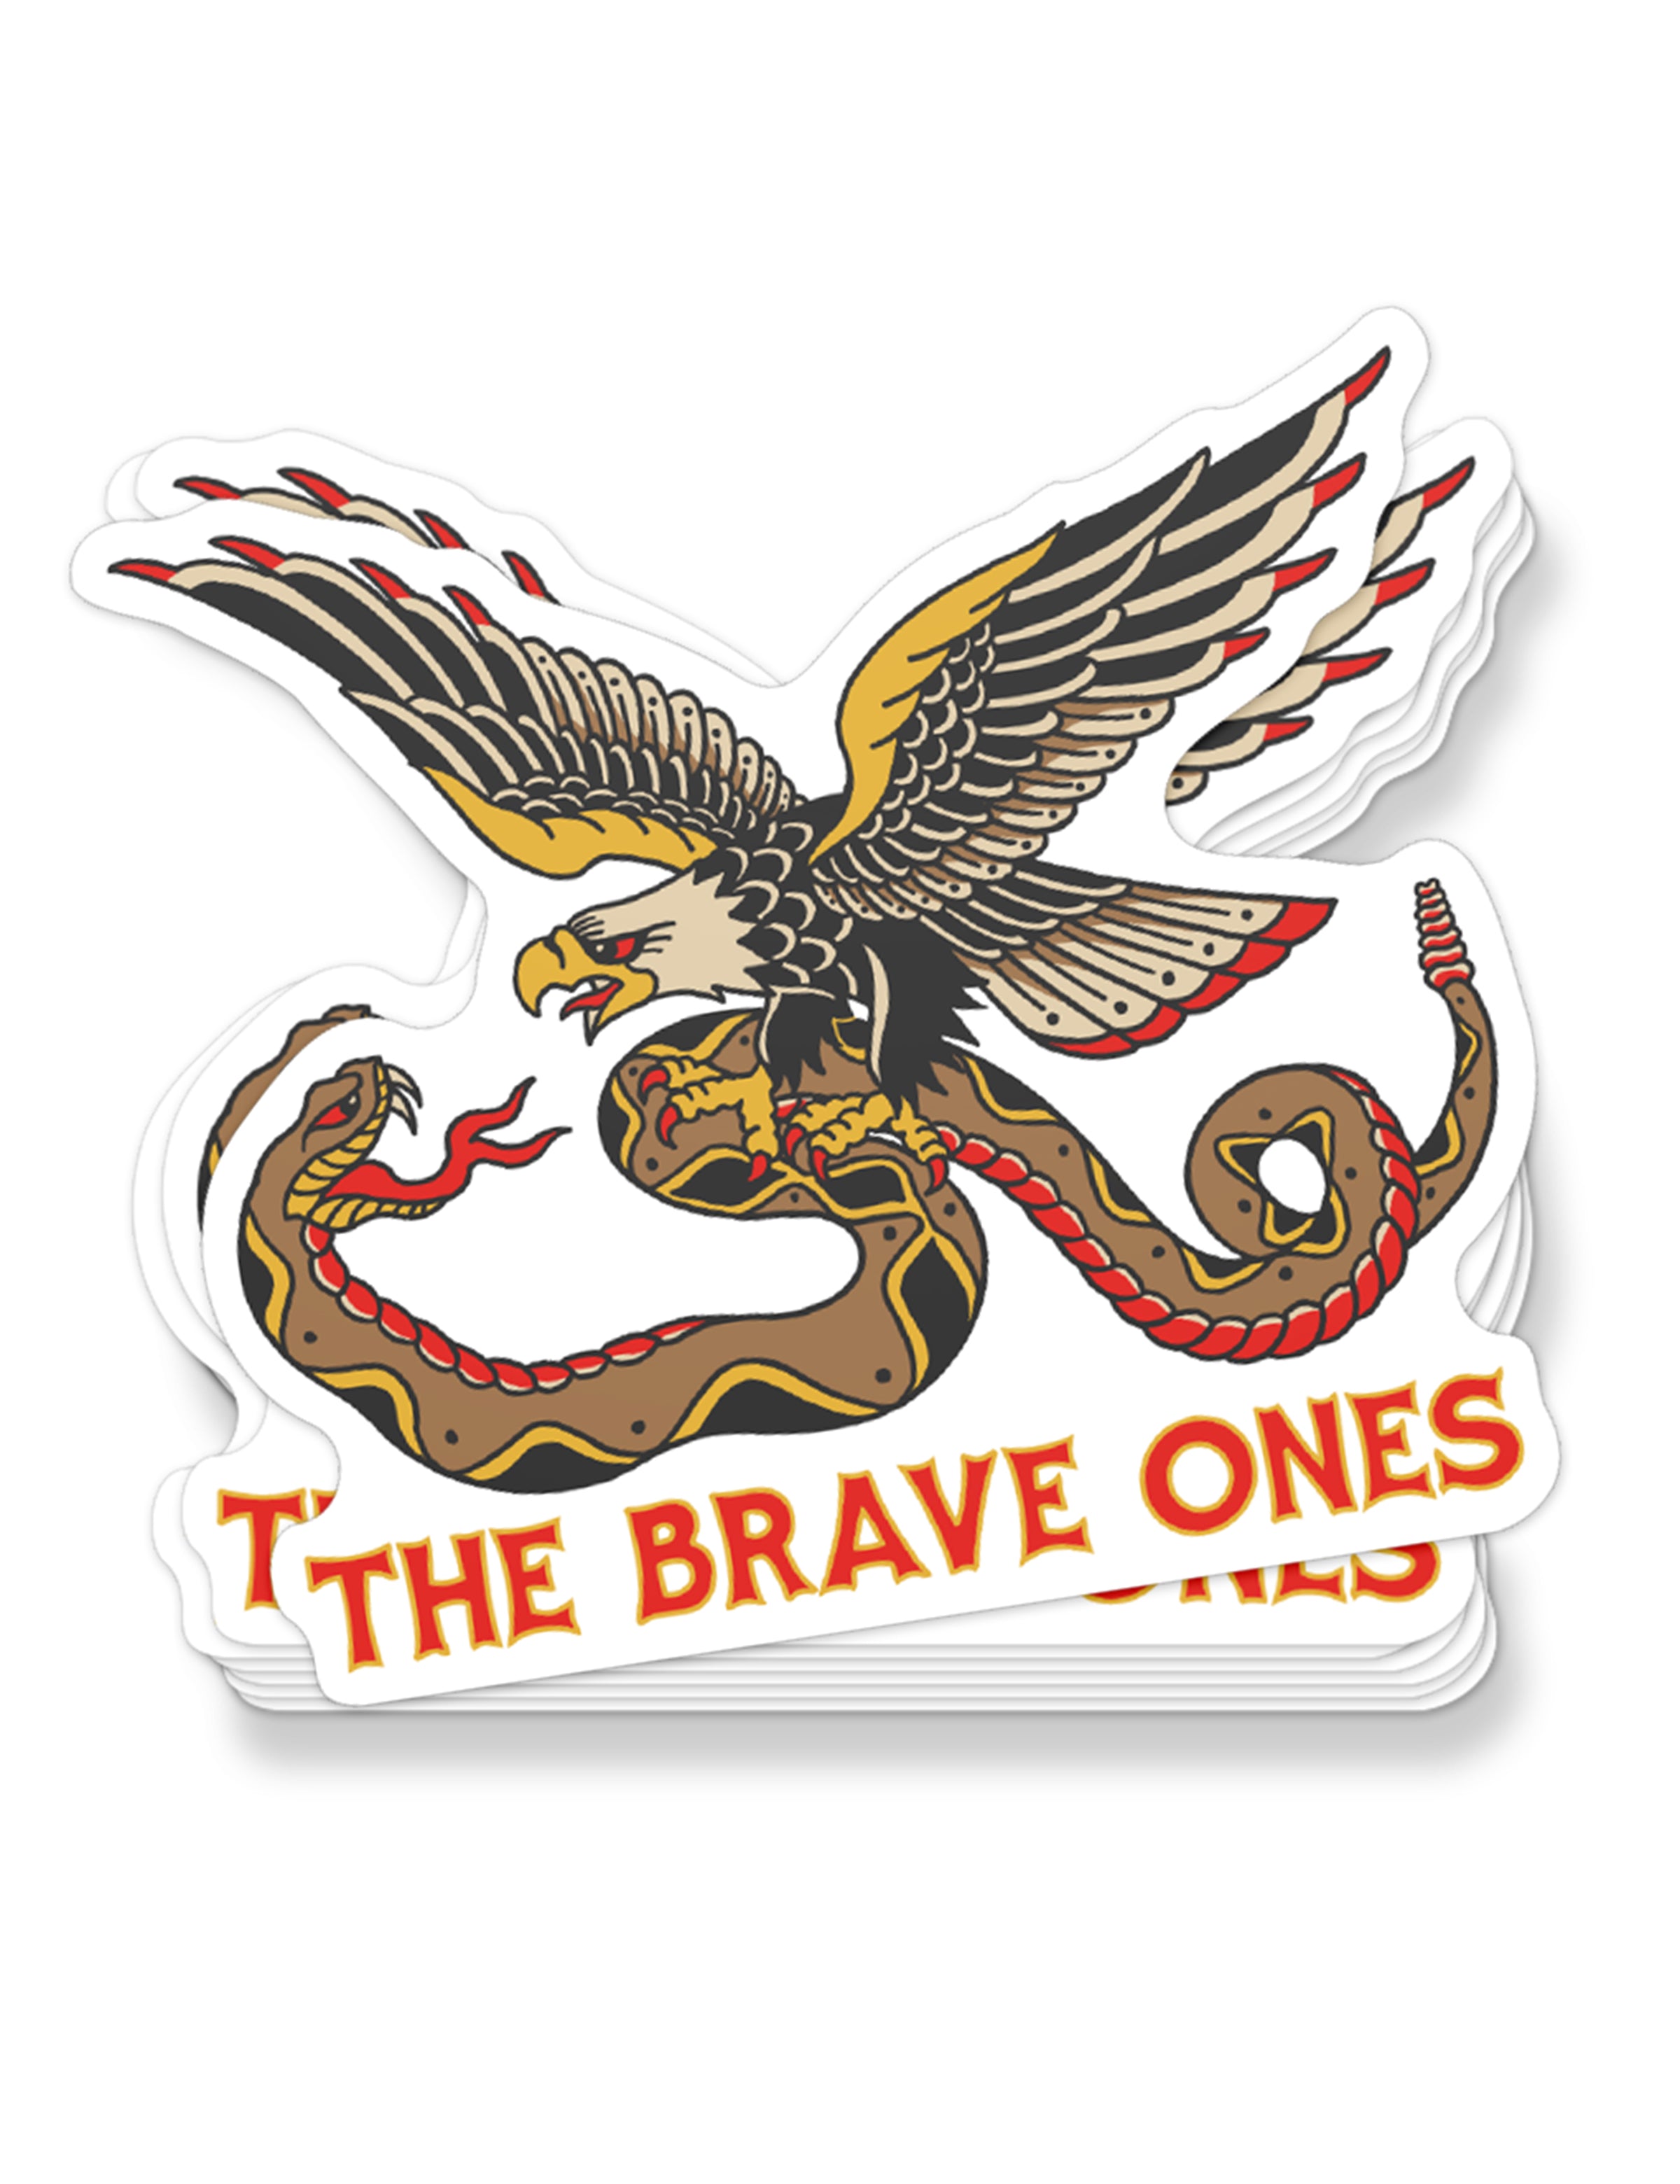 The Brave Ones sticker